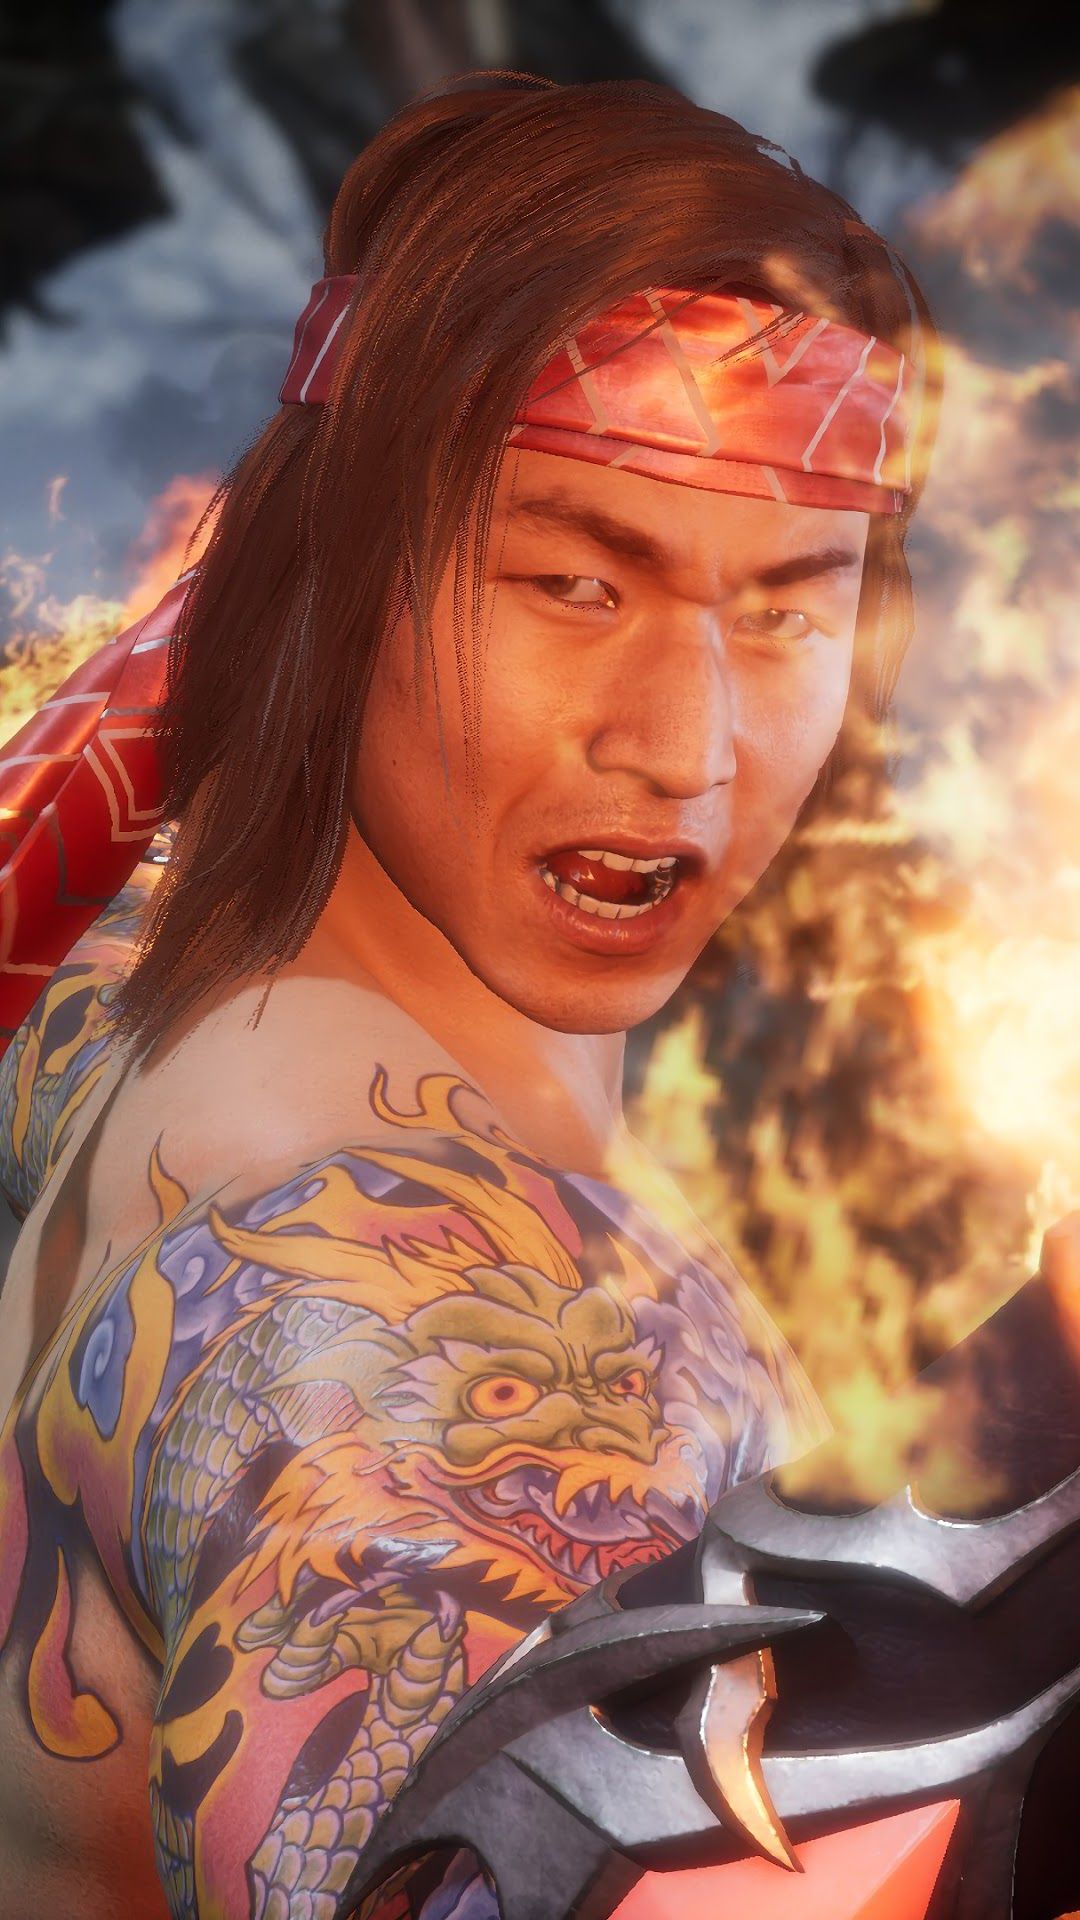 Liu Kang, Mortal Kombat 11 phone HD Wallpaper, Image, Background, Photo and Picture. Mocah HD Wallpaper